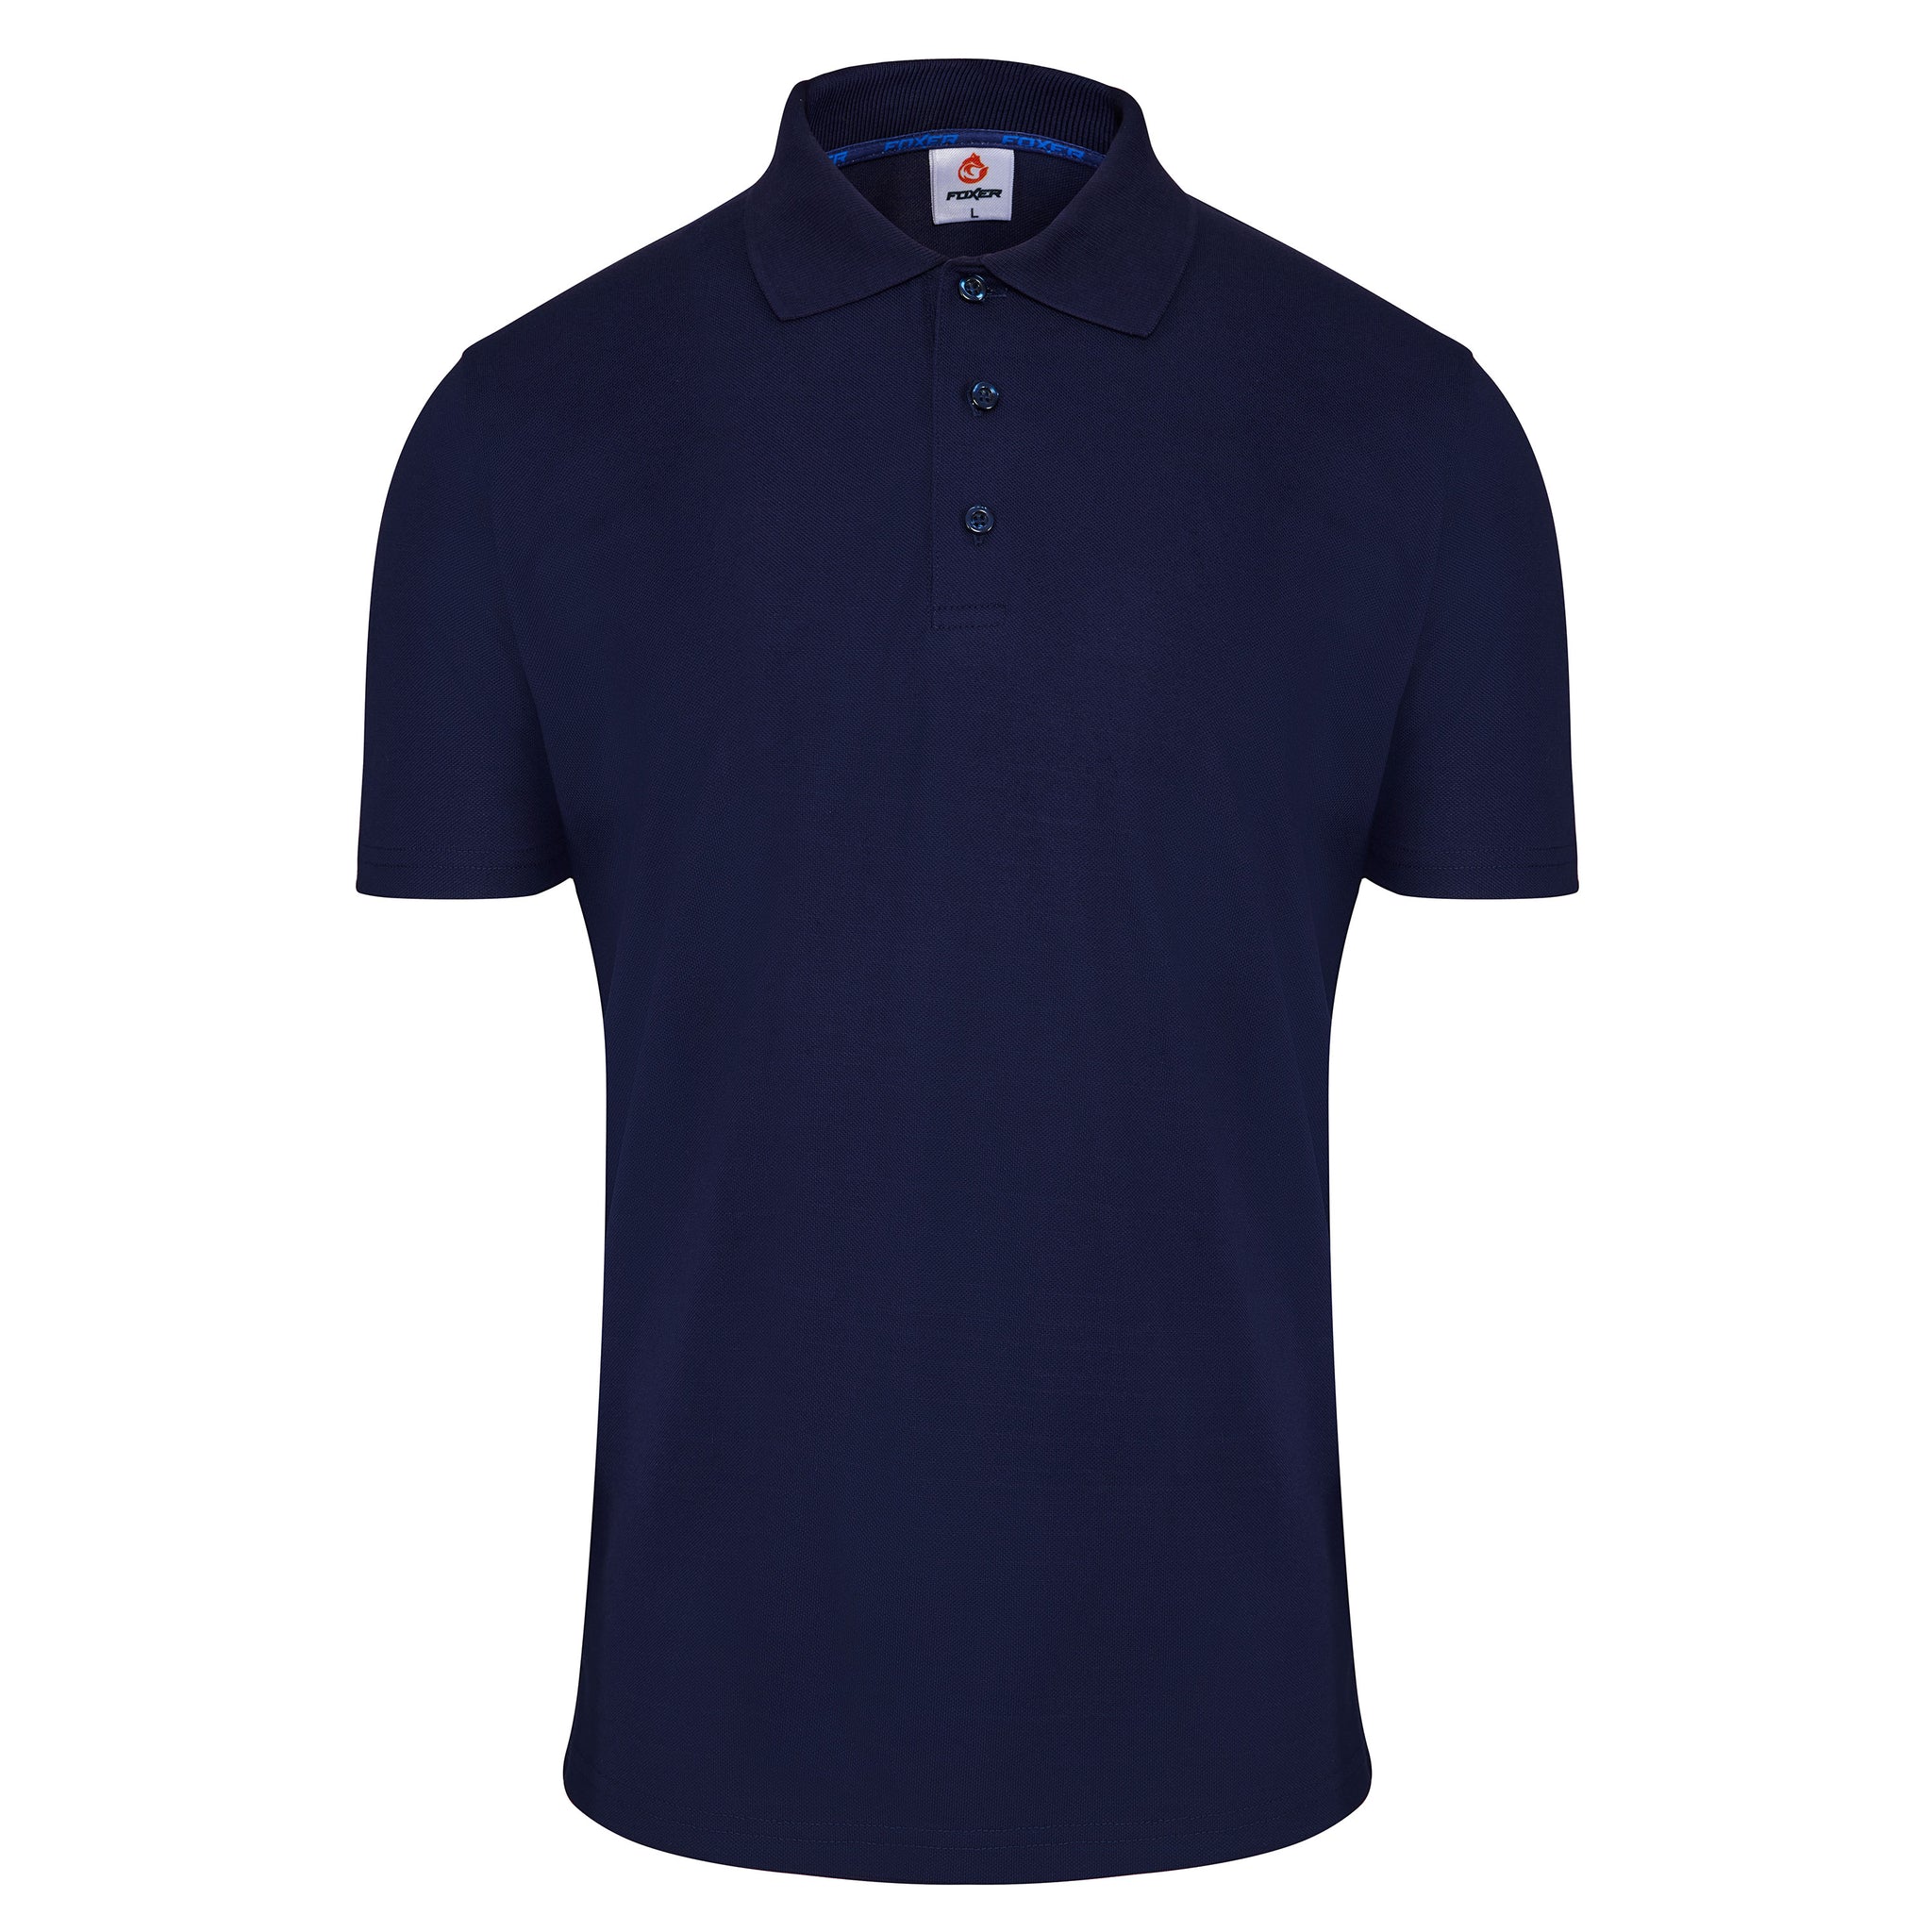 Foxer Dark Blue Polo T-shirt FTM-LA-012